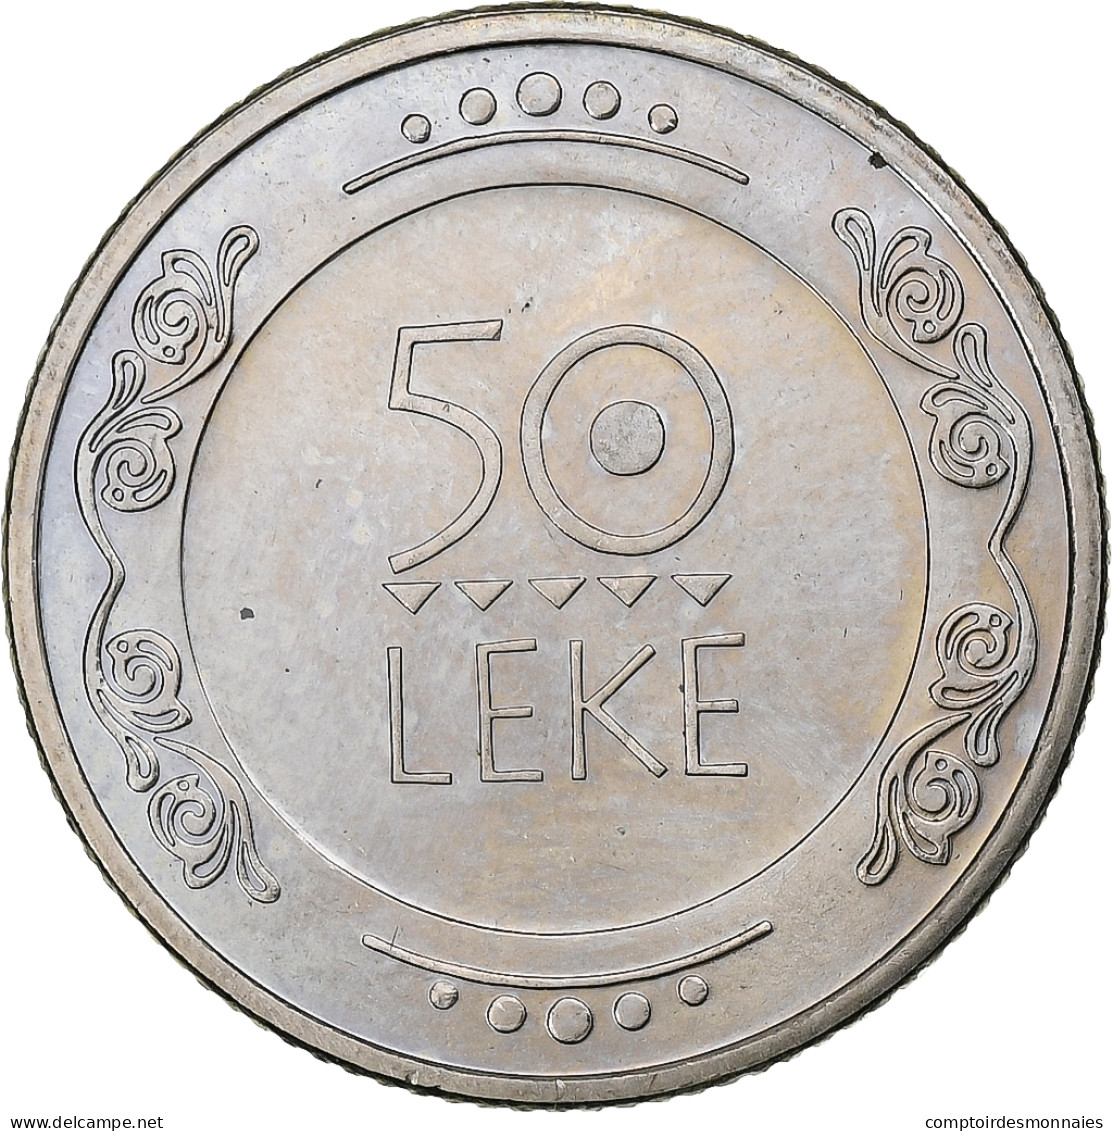 Albanie, 50 Lekë, 2004, Cupro-nickel, SPL, KM:91 - Albania